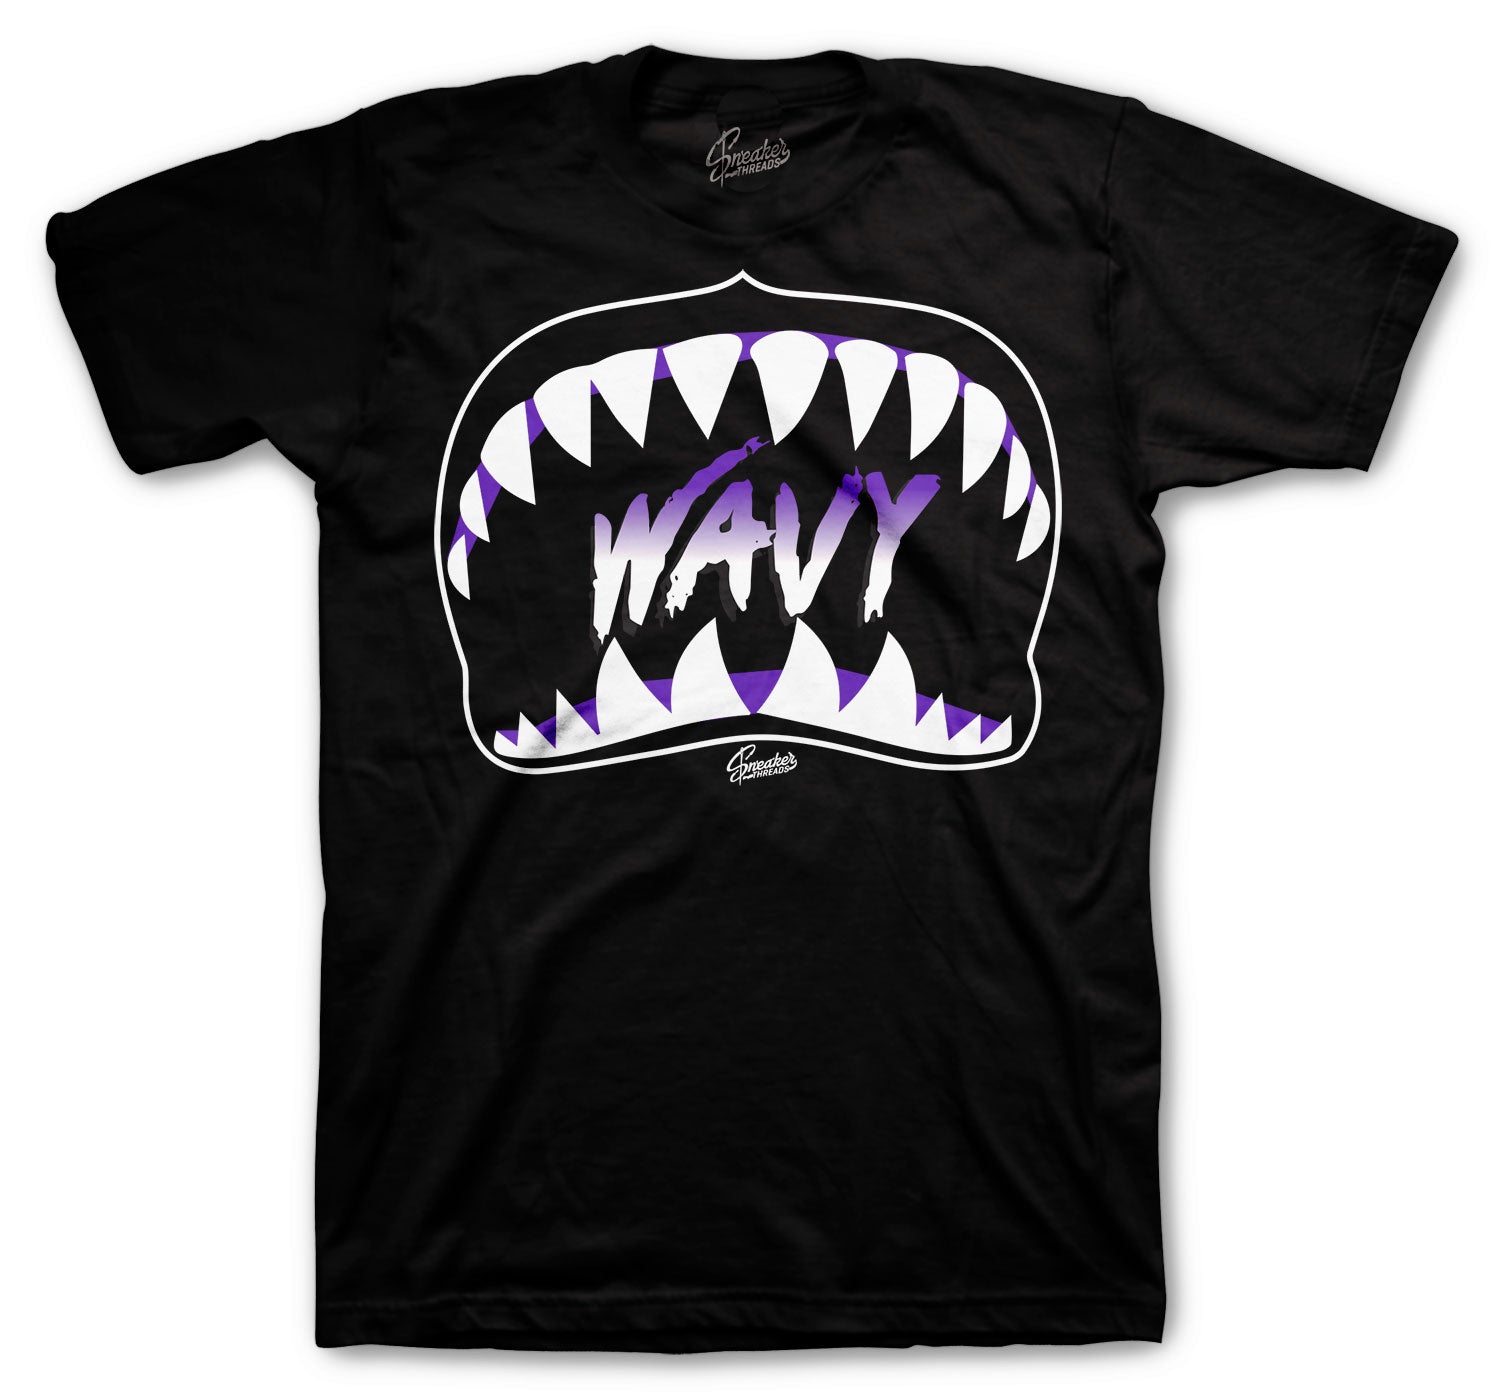 Retro 12 Dark Concord Shirt - Wavy - Black